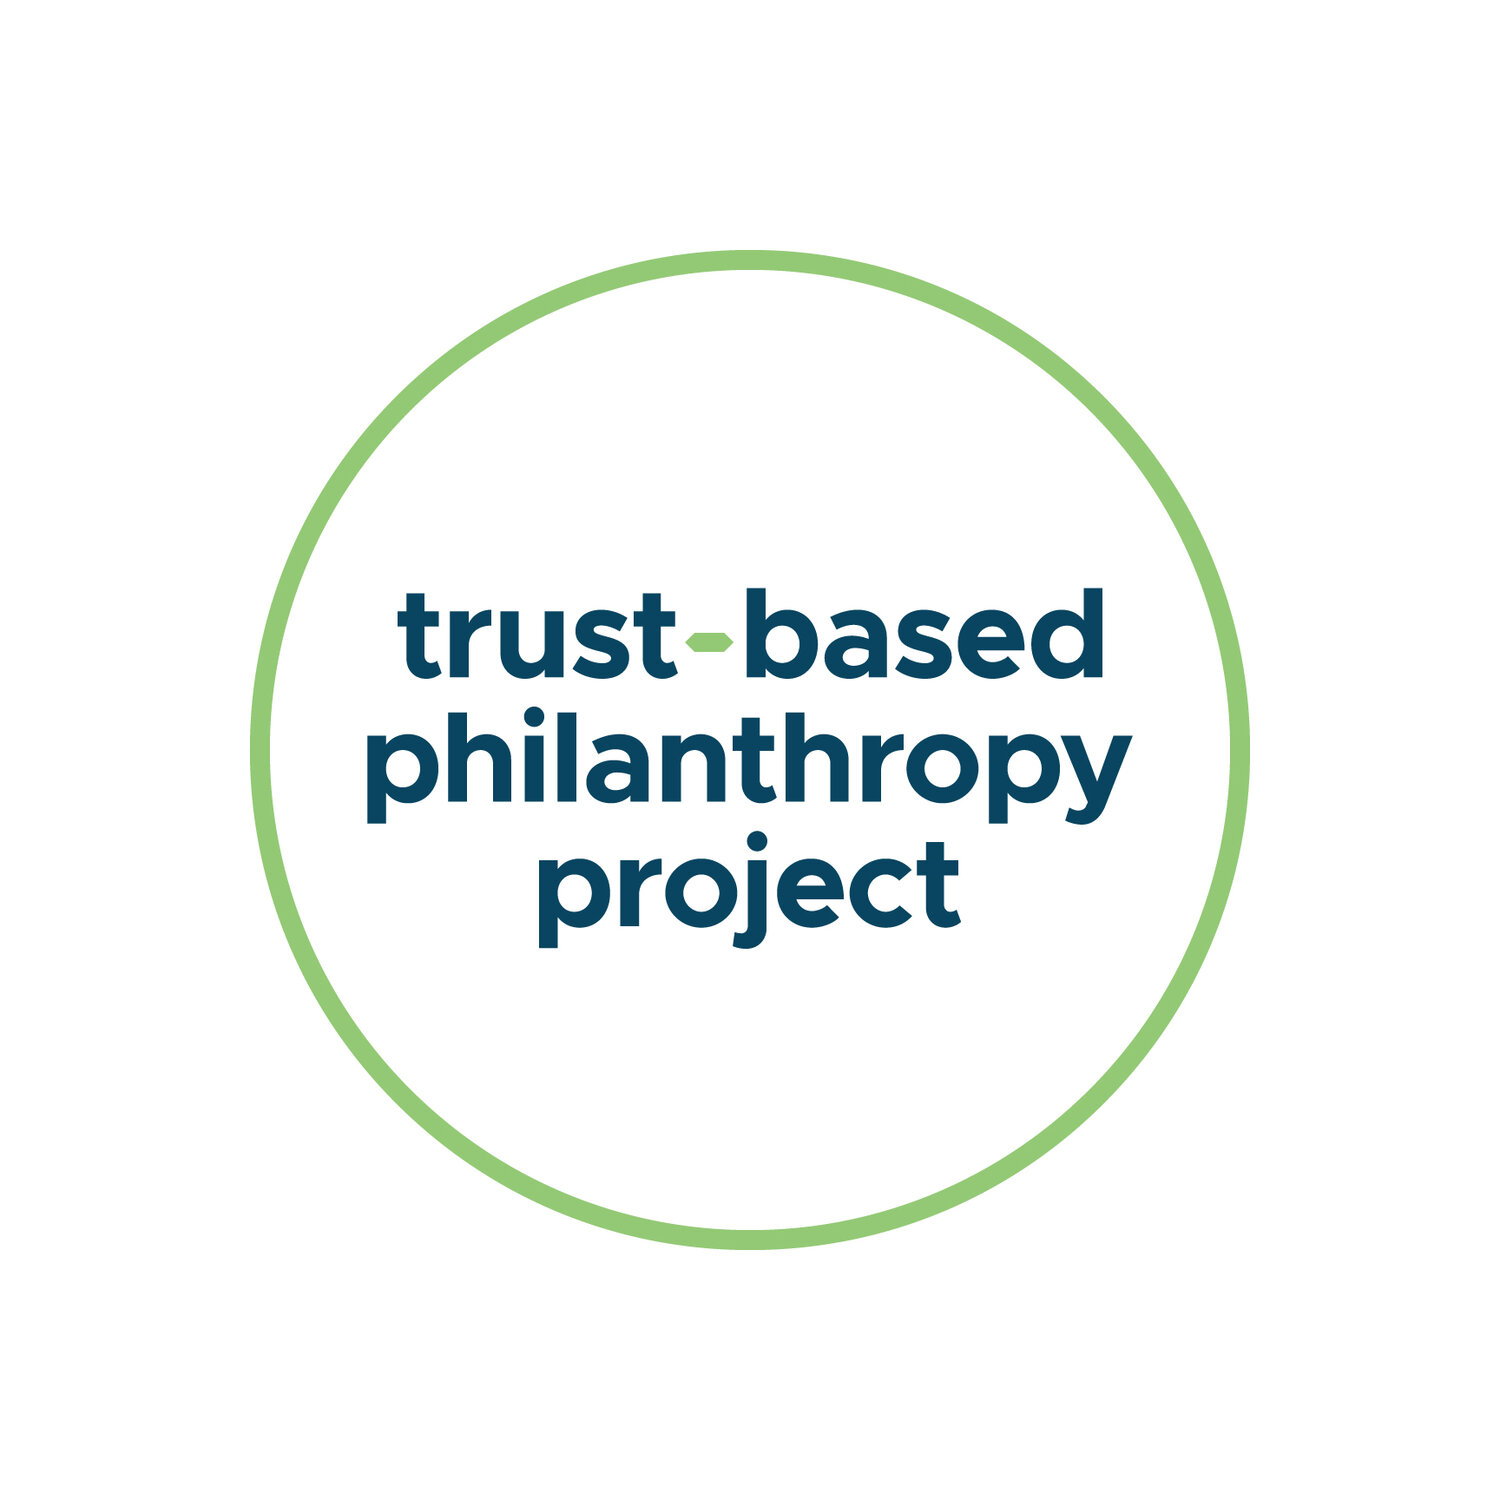 Trust-Based Philanthropy